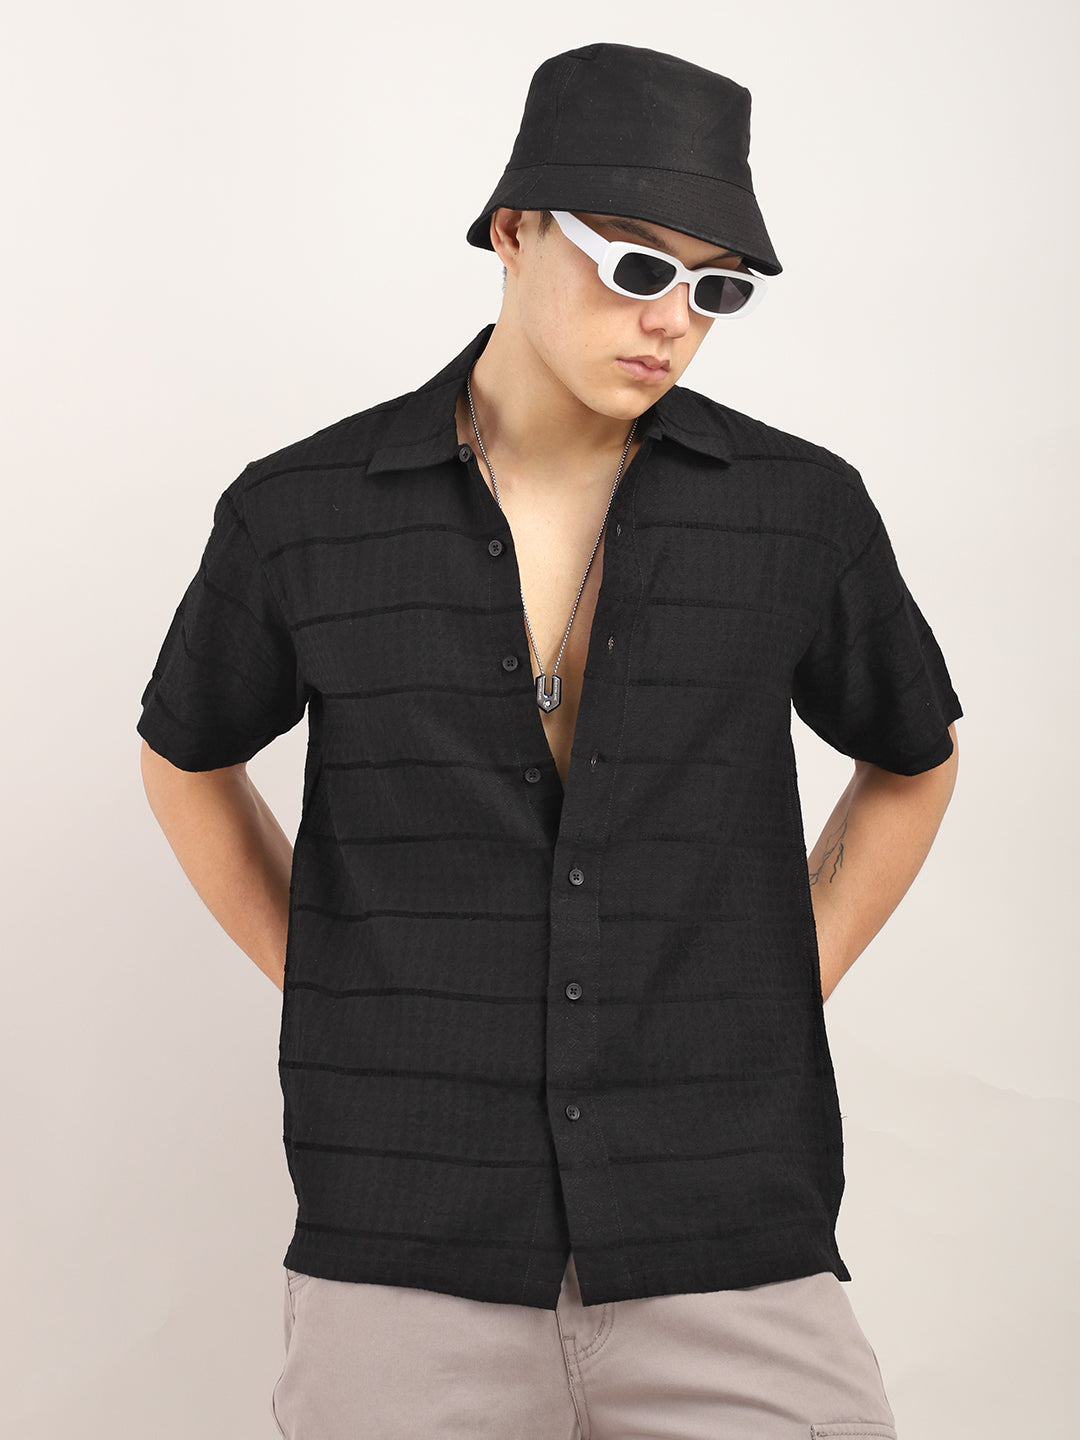 Shirtolo Black Plain Half Sleeve Shirt